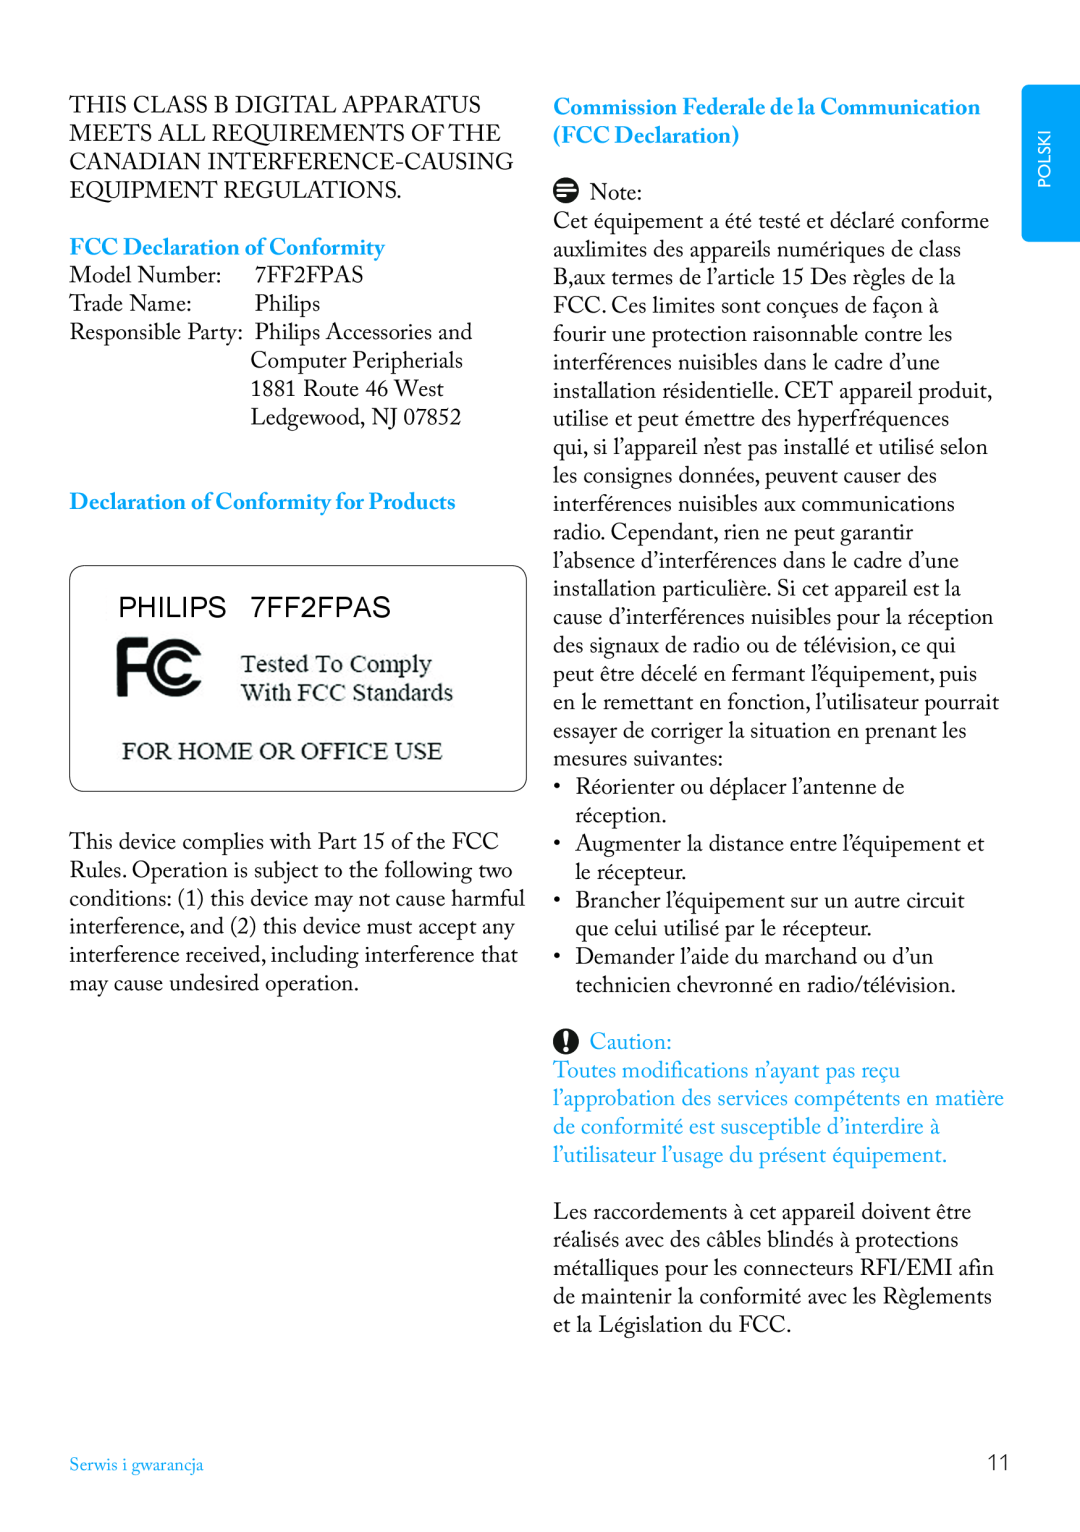 Philips manual FCC Declaration of Conformity, Declaration of Conformity for Products, PHILIPS 7FF2FPAS 